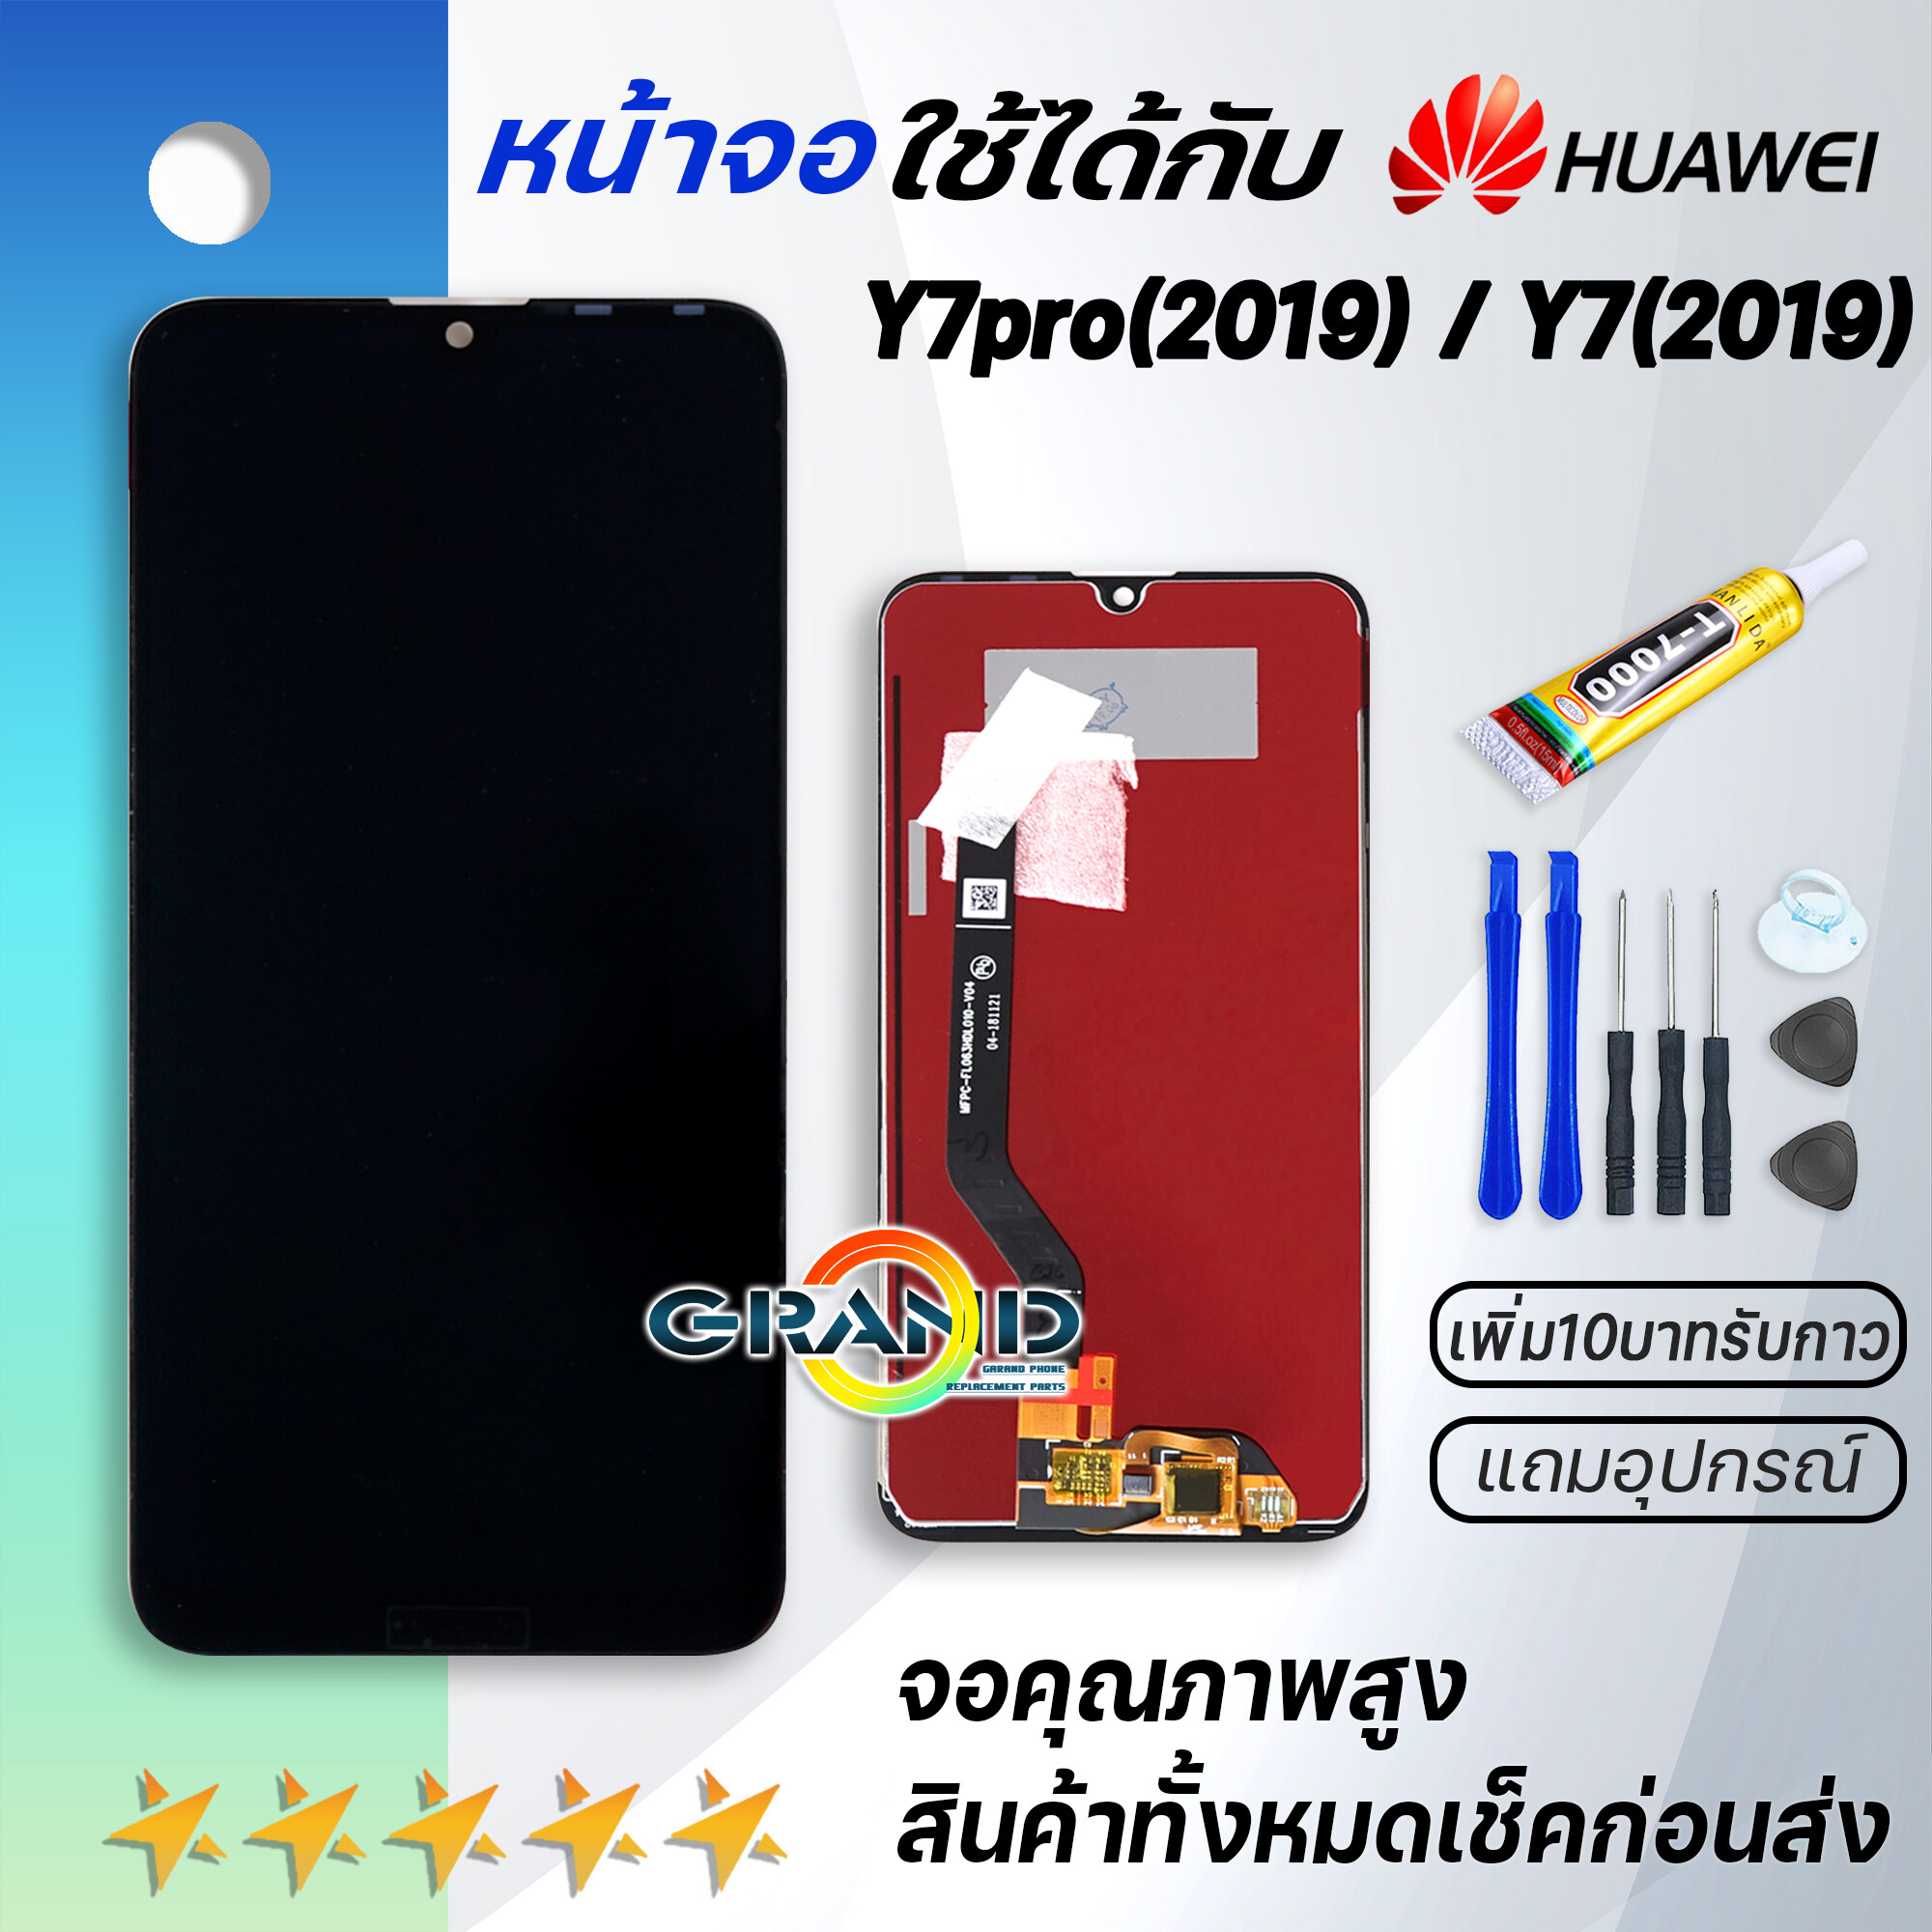 Grand Phone หน้าจอ Y7pro (2019),Y7 2019 หน้าจอ LCD พร้อมทัชสกรีน huawei Y7pro 2019 LCD Screen Display Touch Panel For หัวเว่ย Y7(2019) แถมไขควง สามารถเลือกซื้อพร้อมกาว